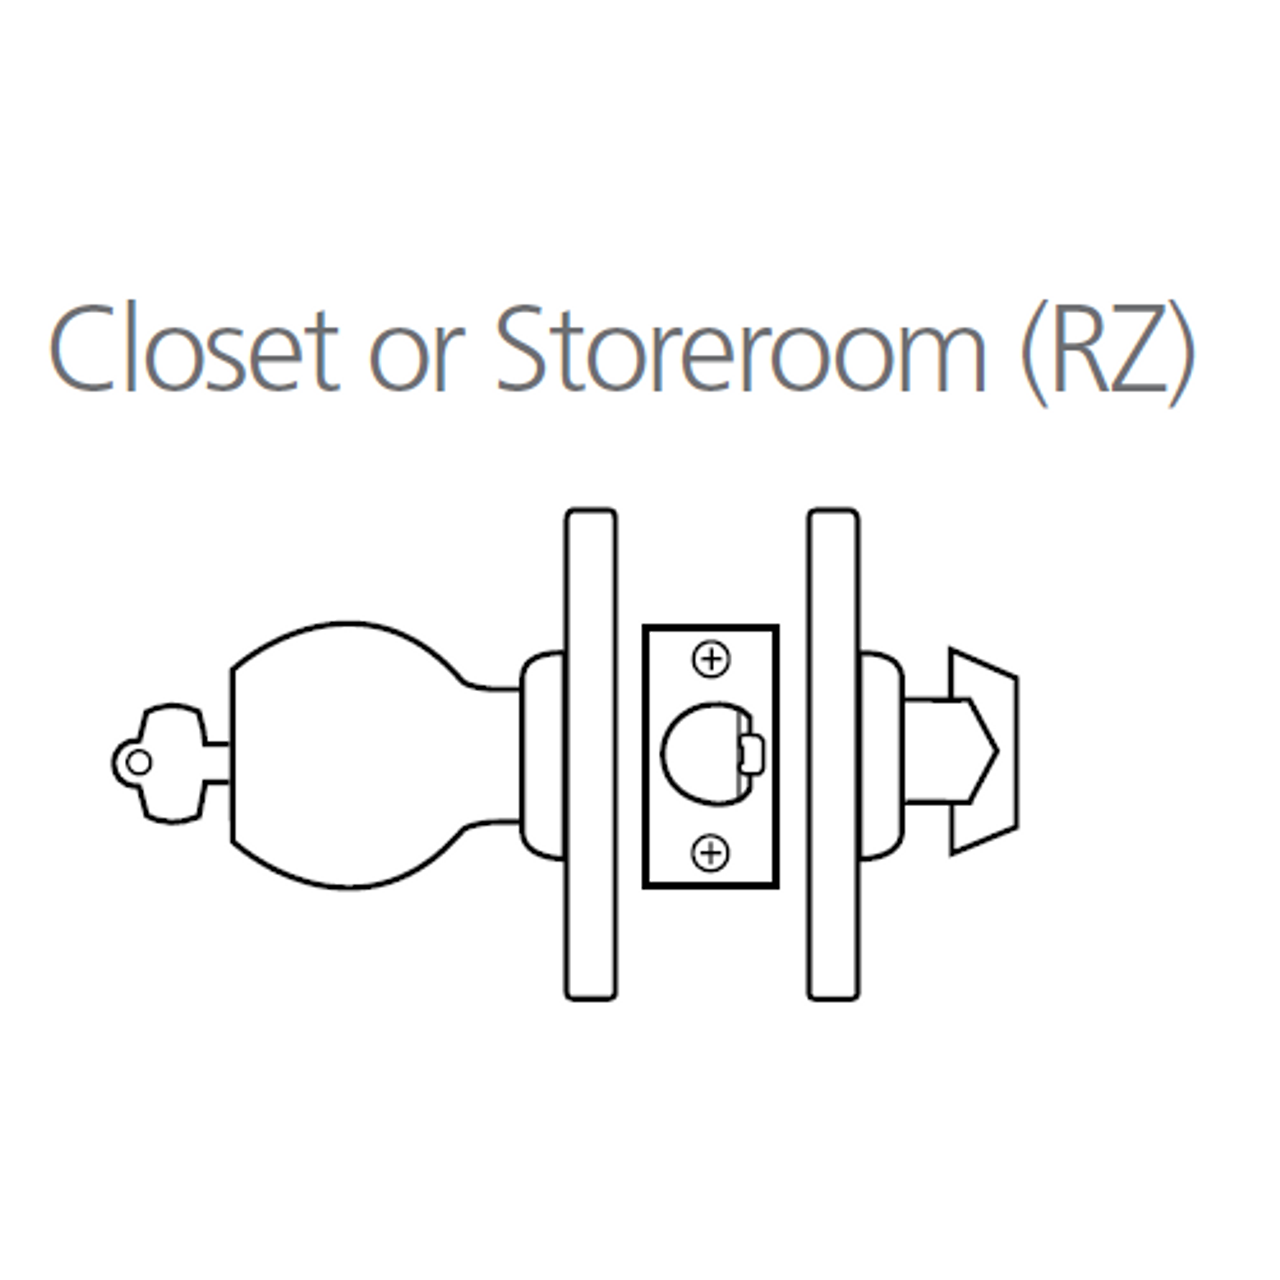 8K57RZ4DSTK625 Best 8K Series Closet or Storeroom Heavy Duty Cylindrical Knob Locks with Round Style in Bright Chrome